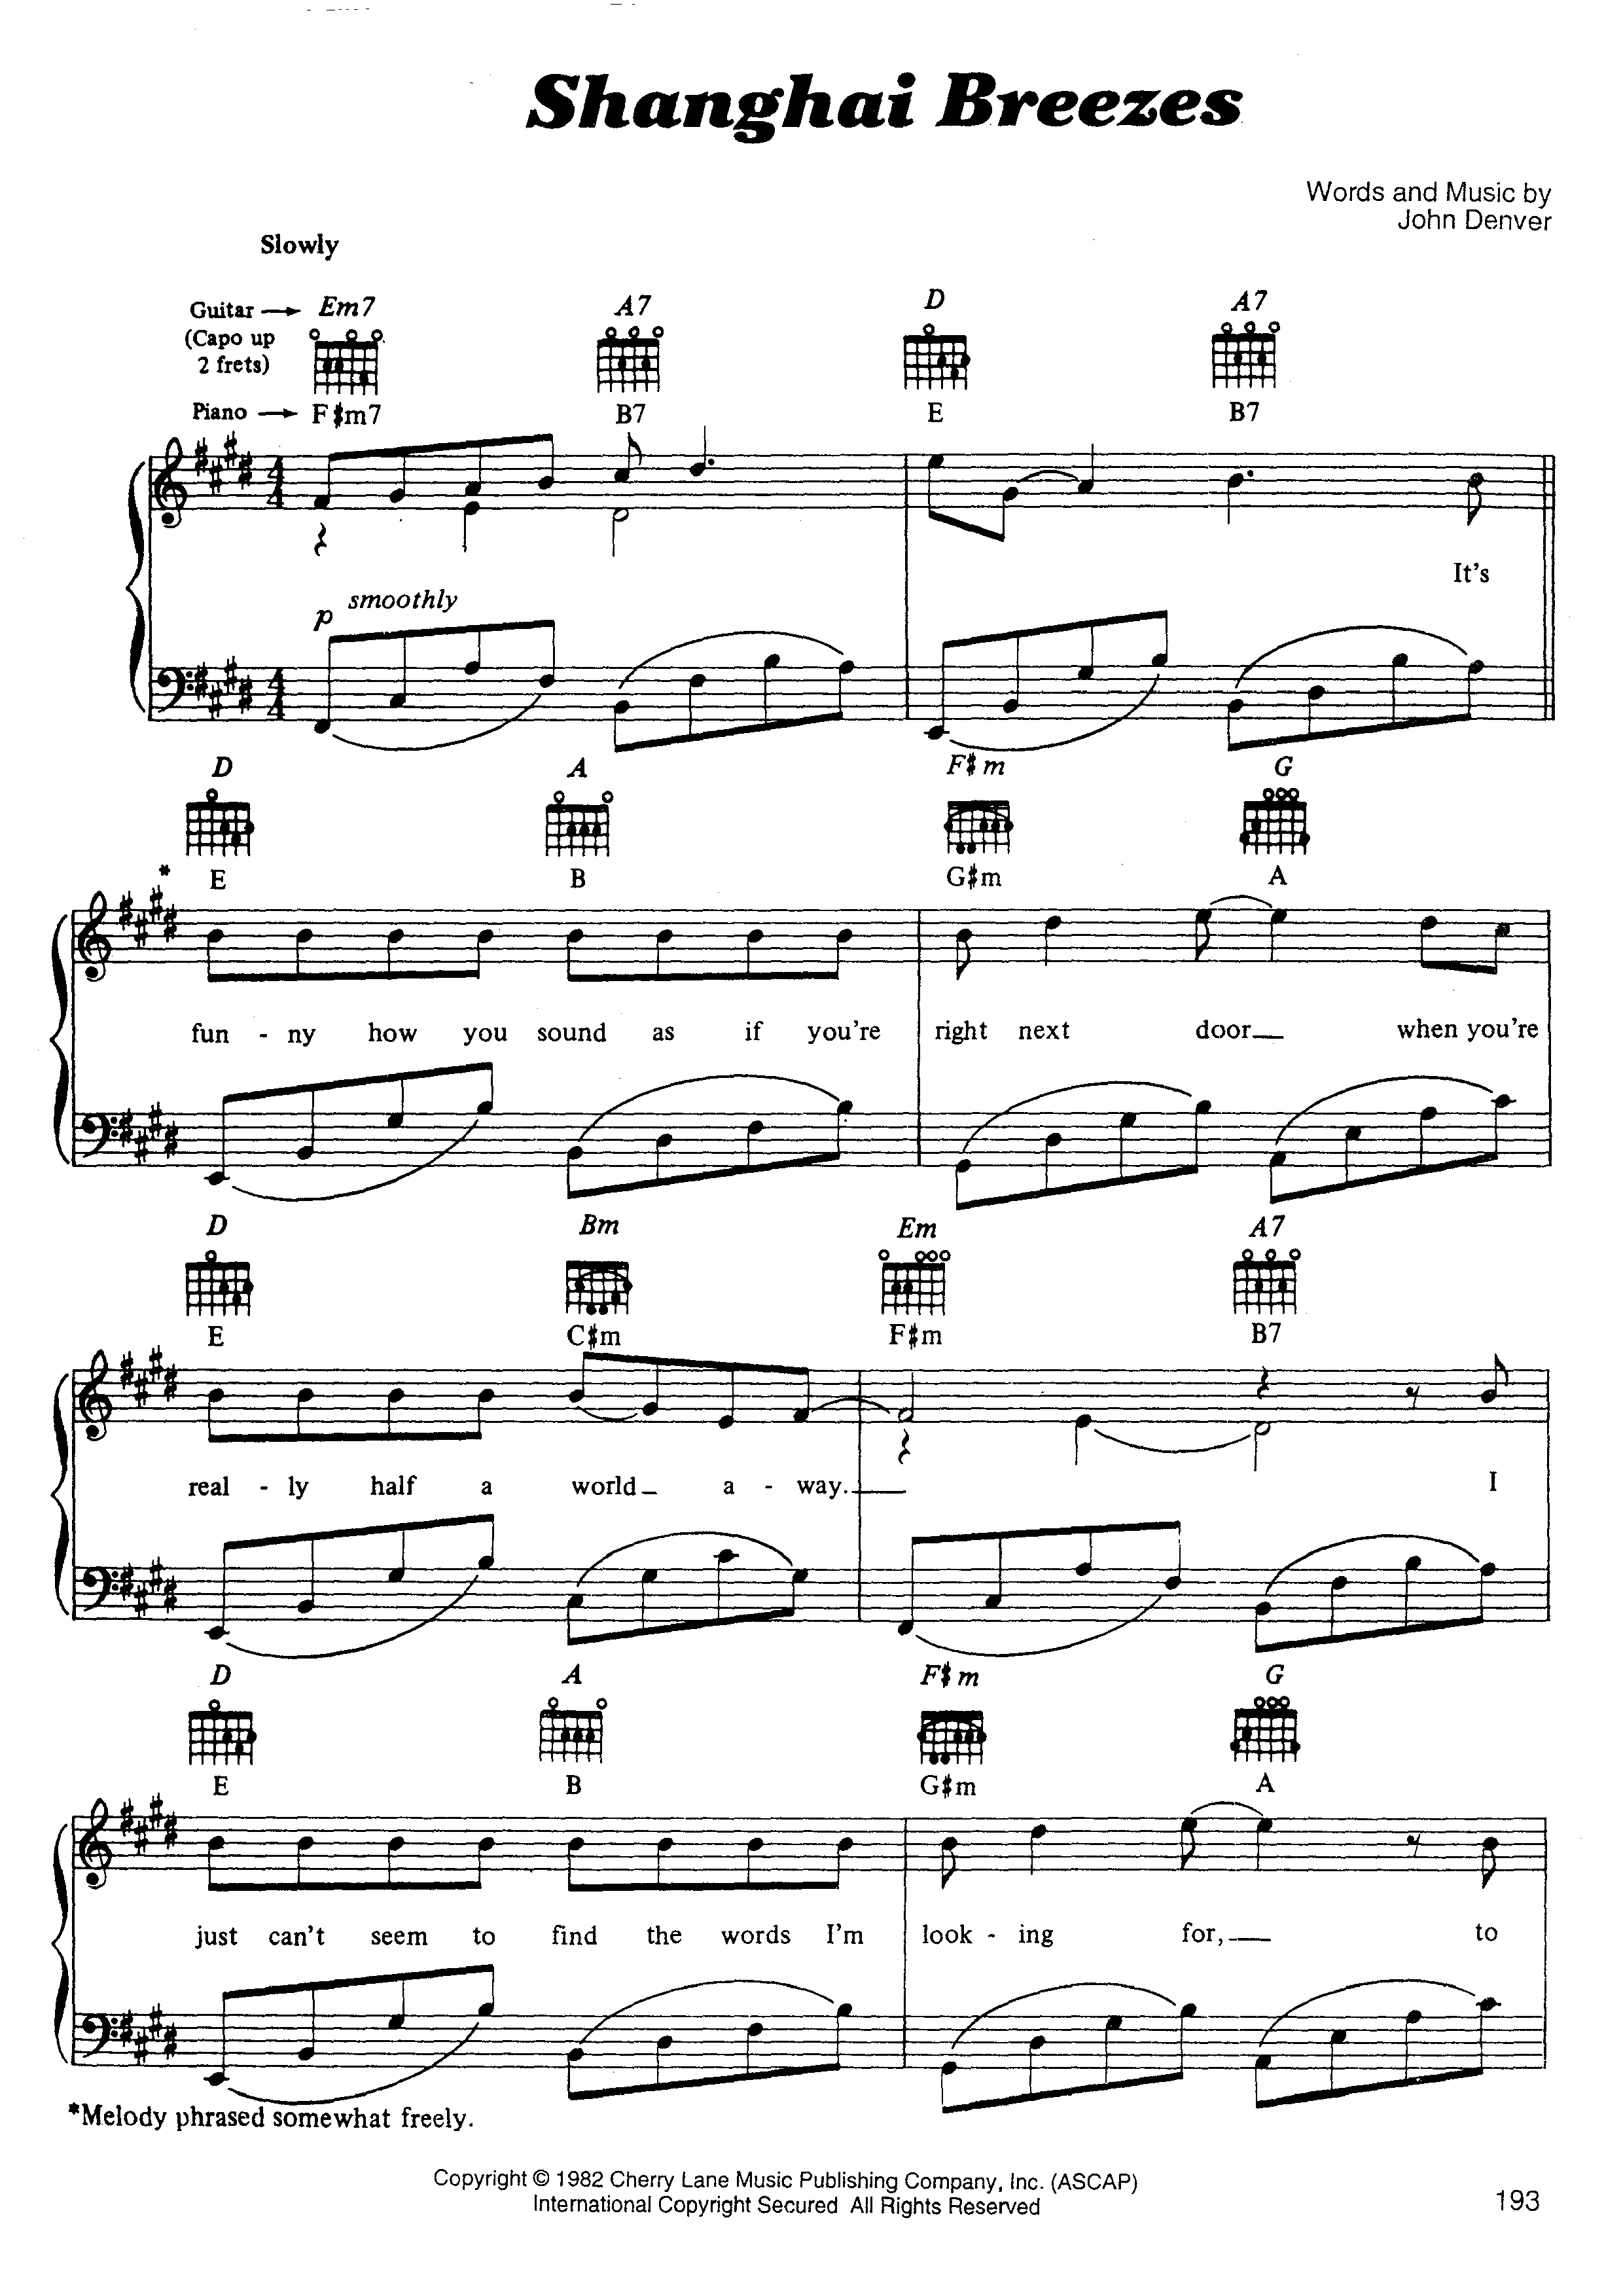 Shanghai Breezes琴譜